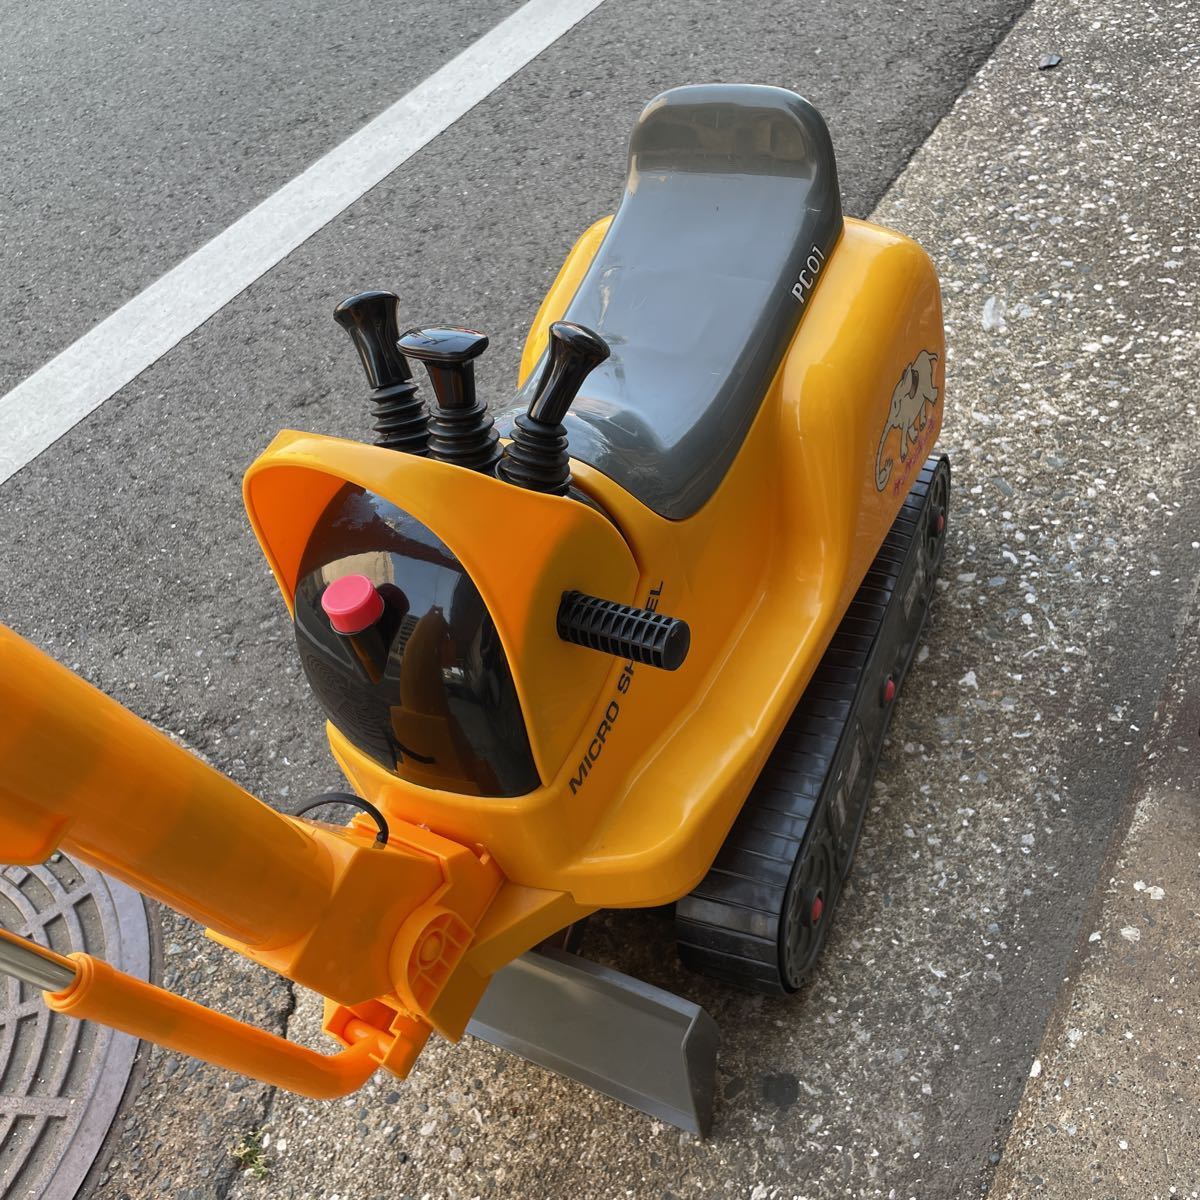  пассажирский микро экскаватор Komatsu PC01 пара .. игрушка-"самокат" детский транспортное средство .. машина совок PC-01[ игрушка ko-]